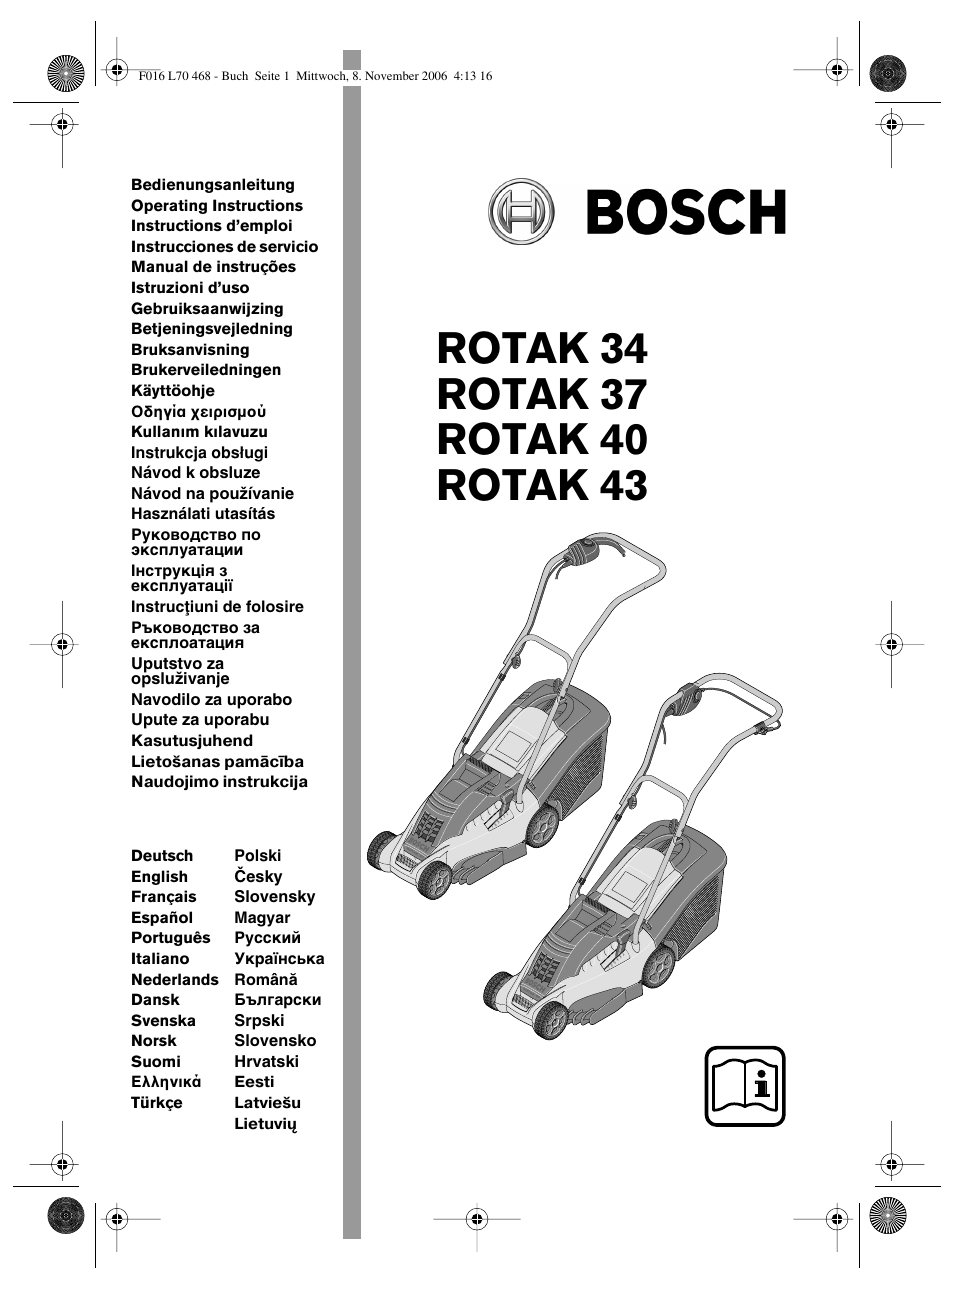 Bosch ROTAK 37 User Manual | 171 pages | Also for: ROTAK 34, ROTAK 40, ROTAK  43